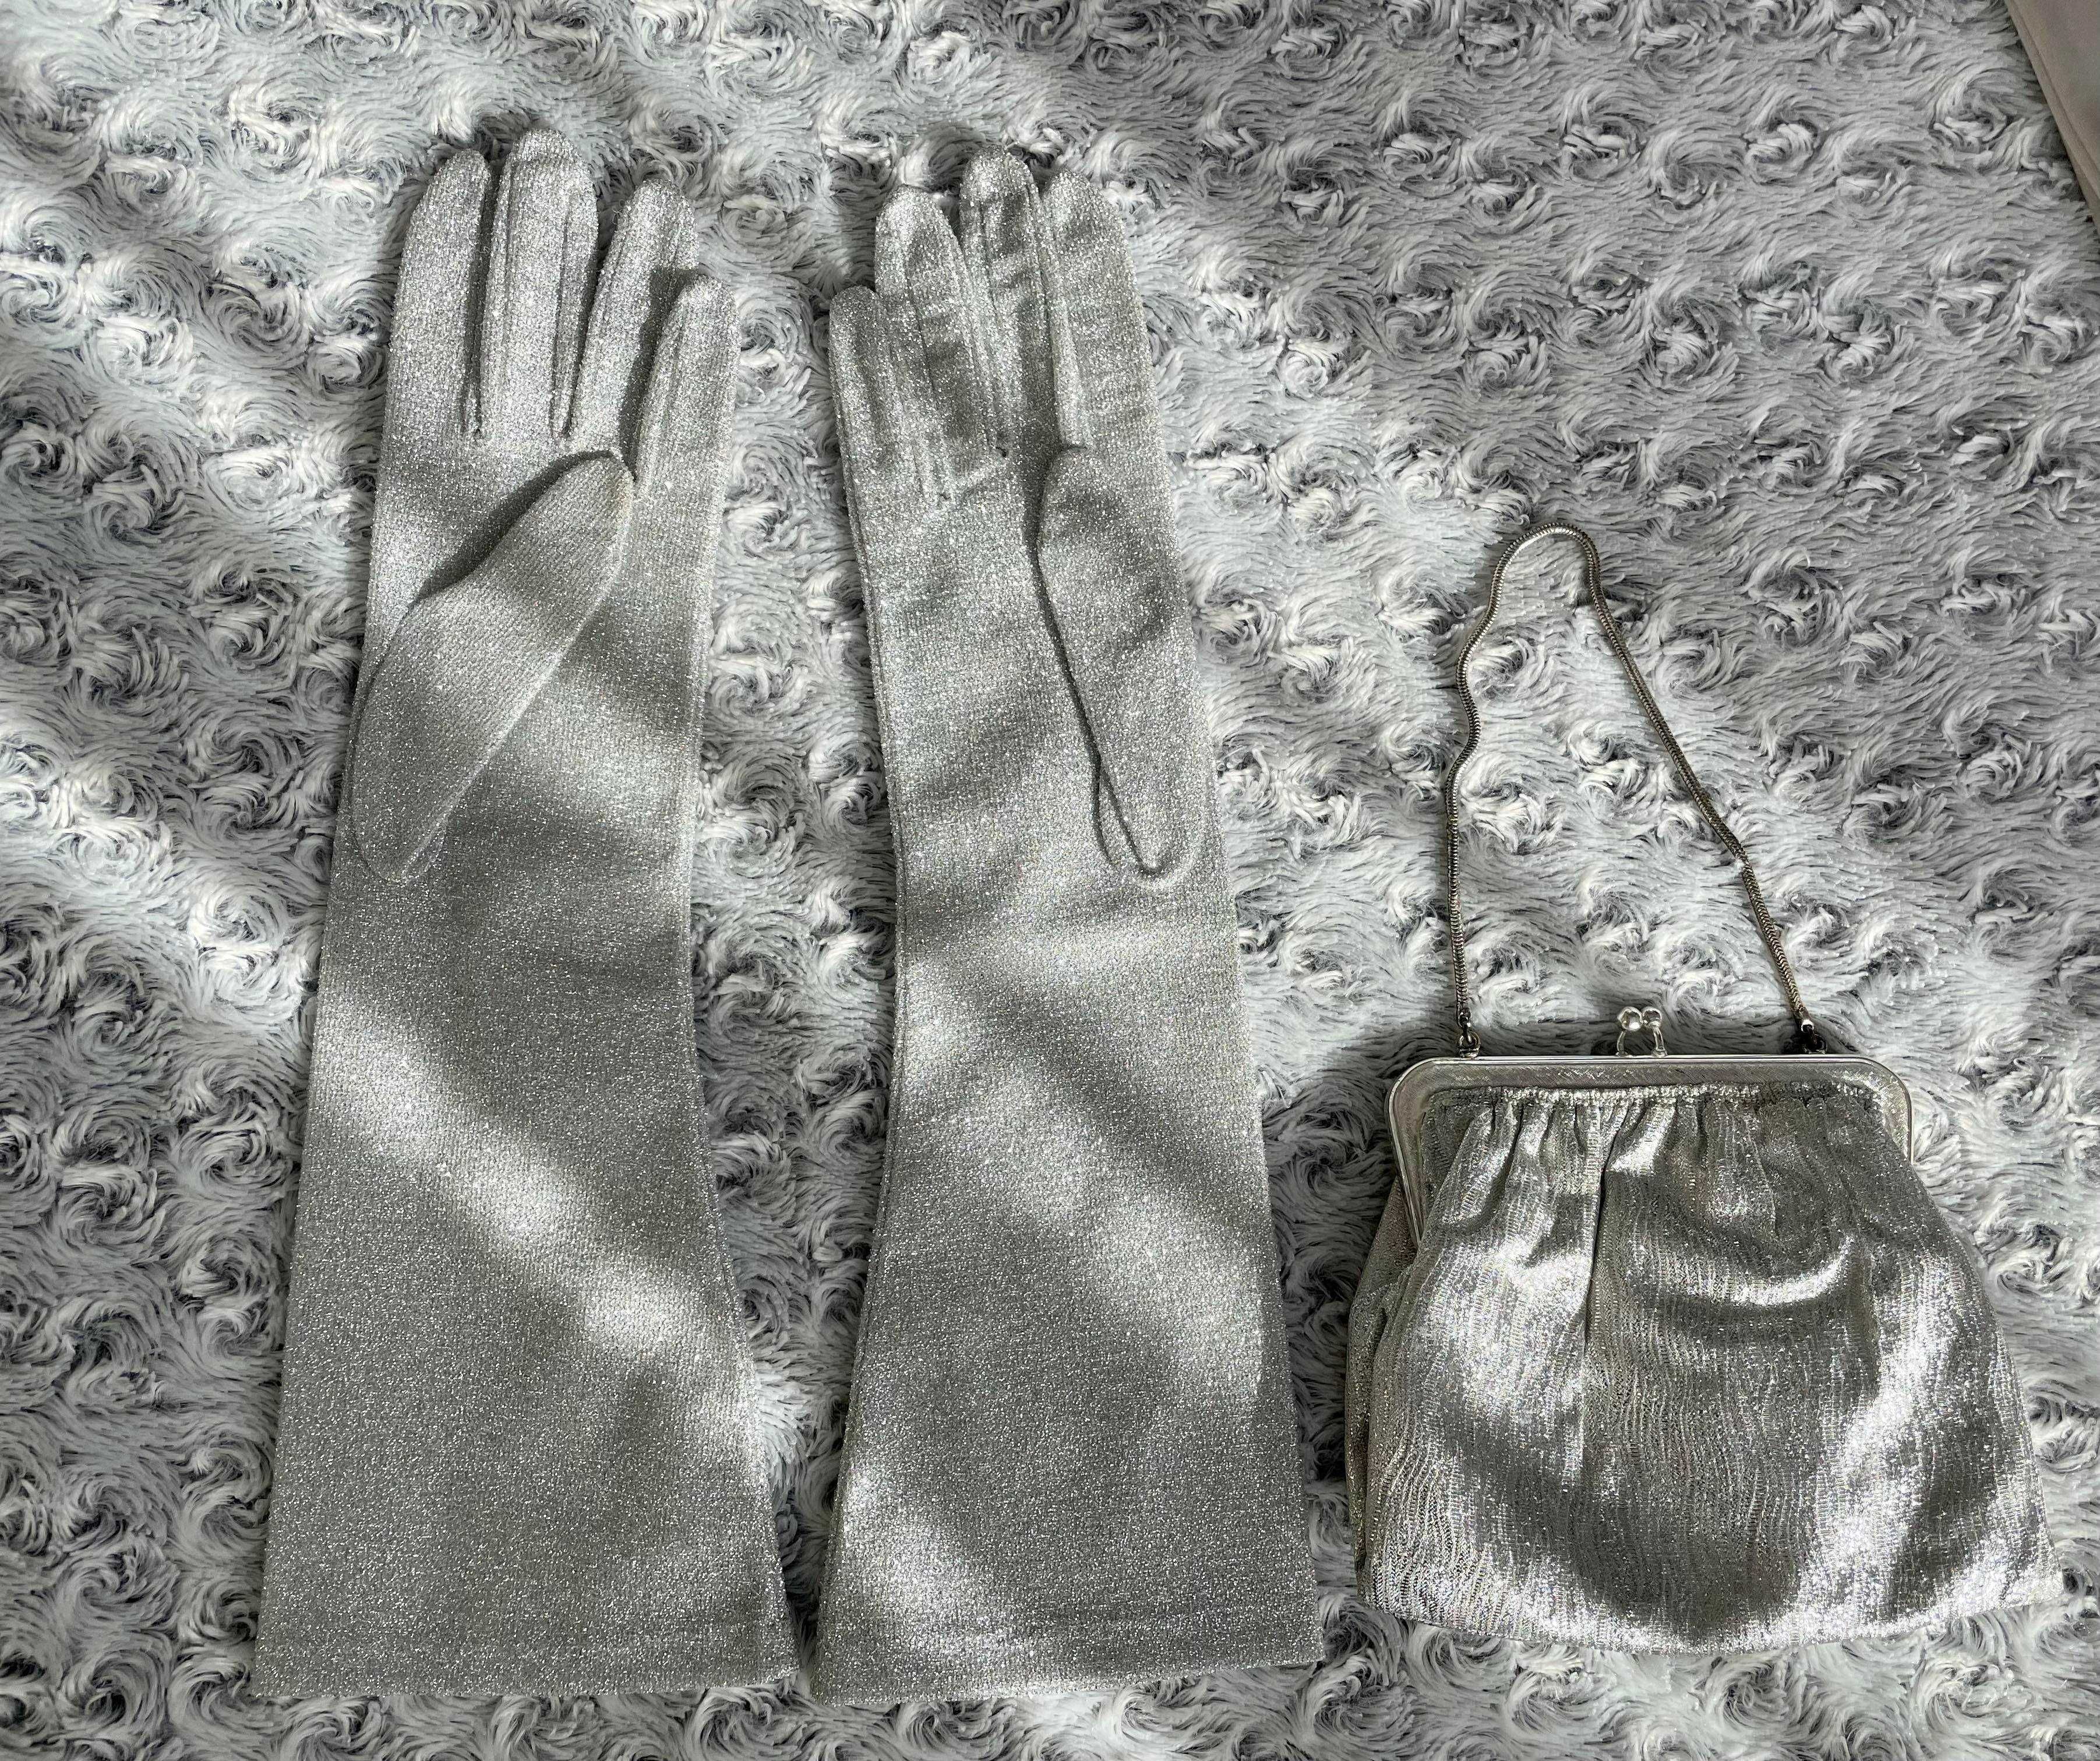 mănuși vintage macrame, dantelă, anii 50-60